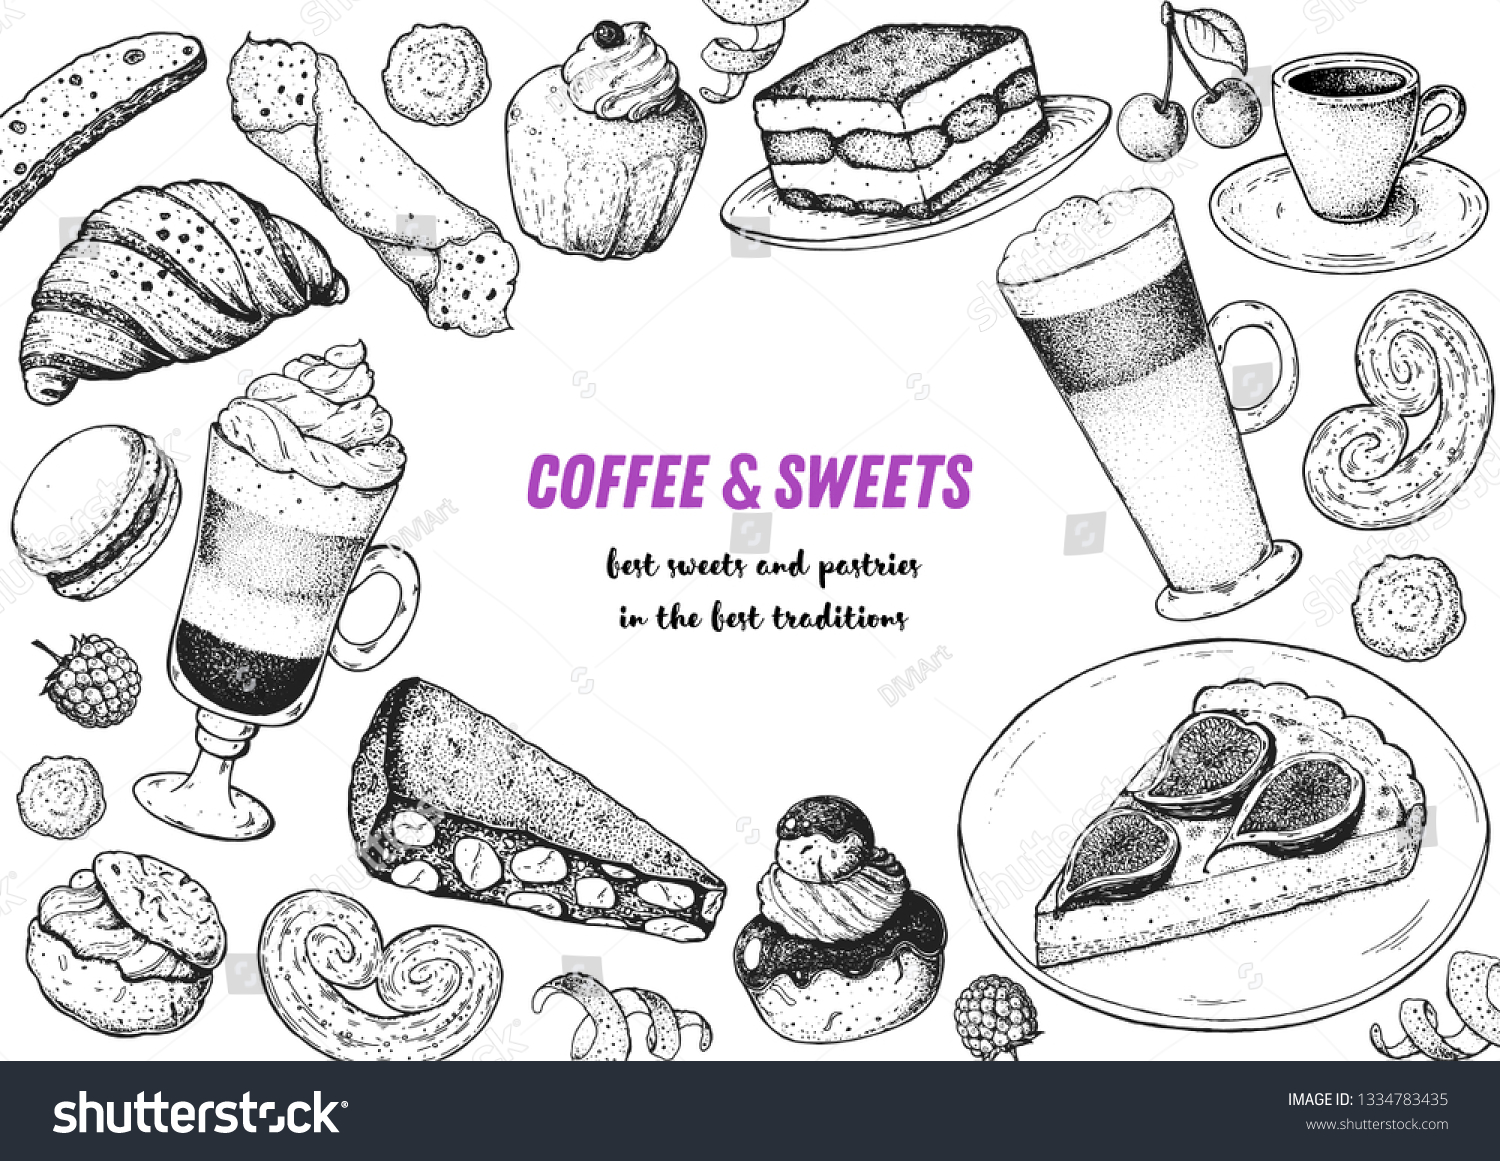 Coffee shop menu design. Hand drawn sketch illustration. Coffee and desserts. Cafe menu elements. Desserts for breakfast. #1334783435